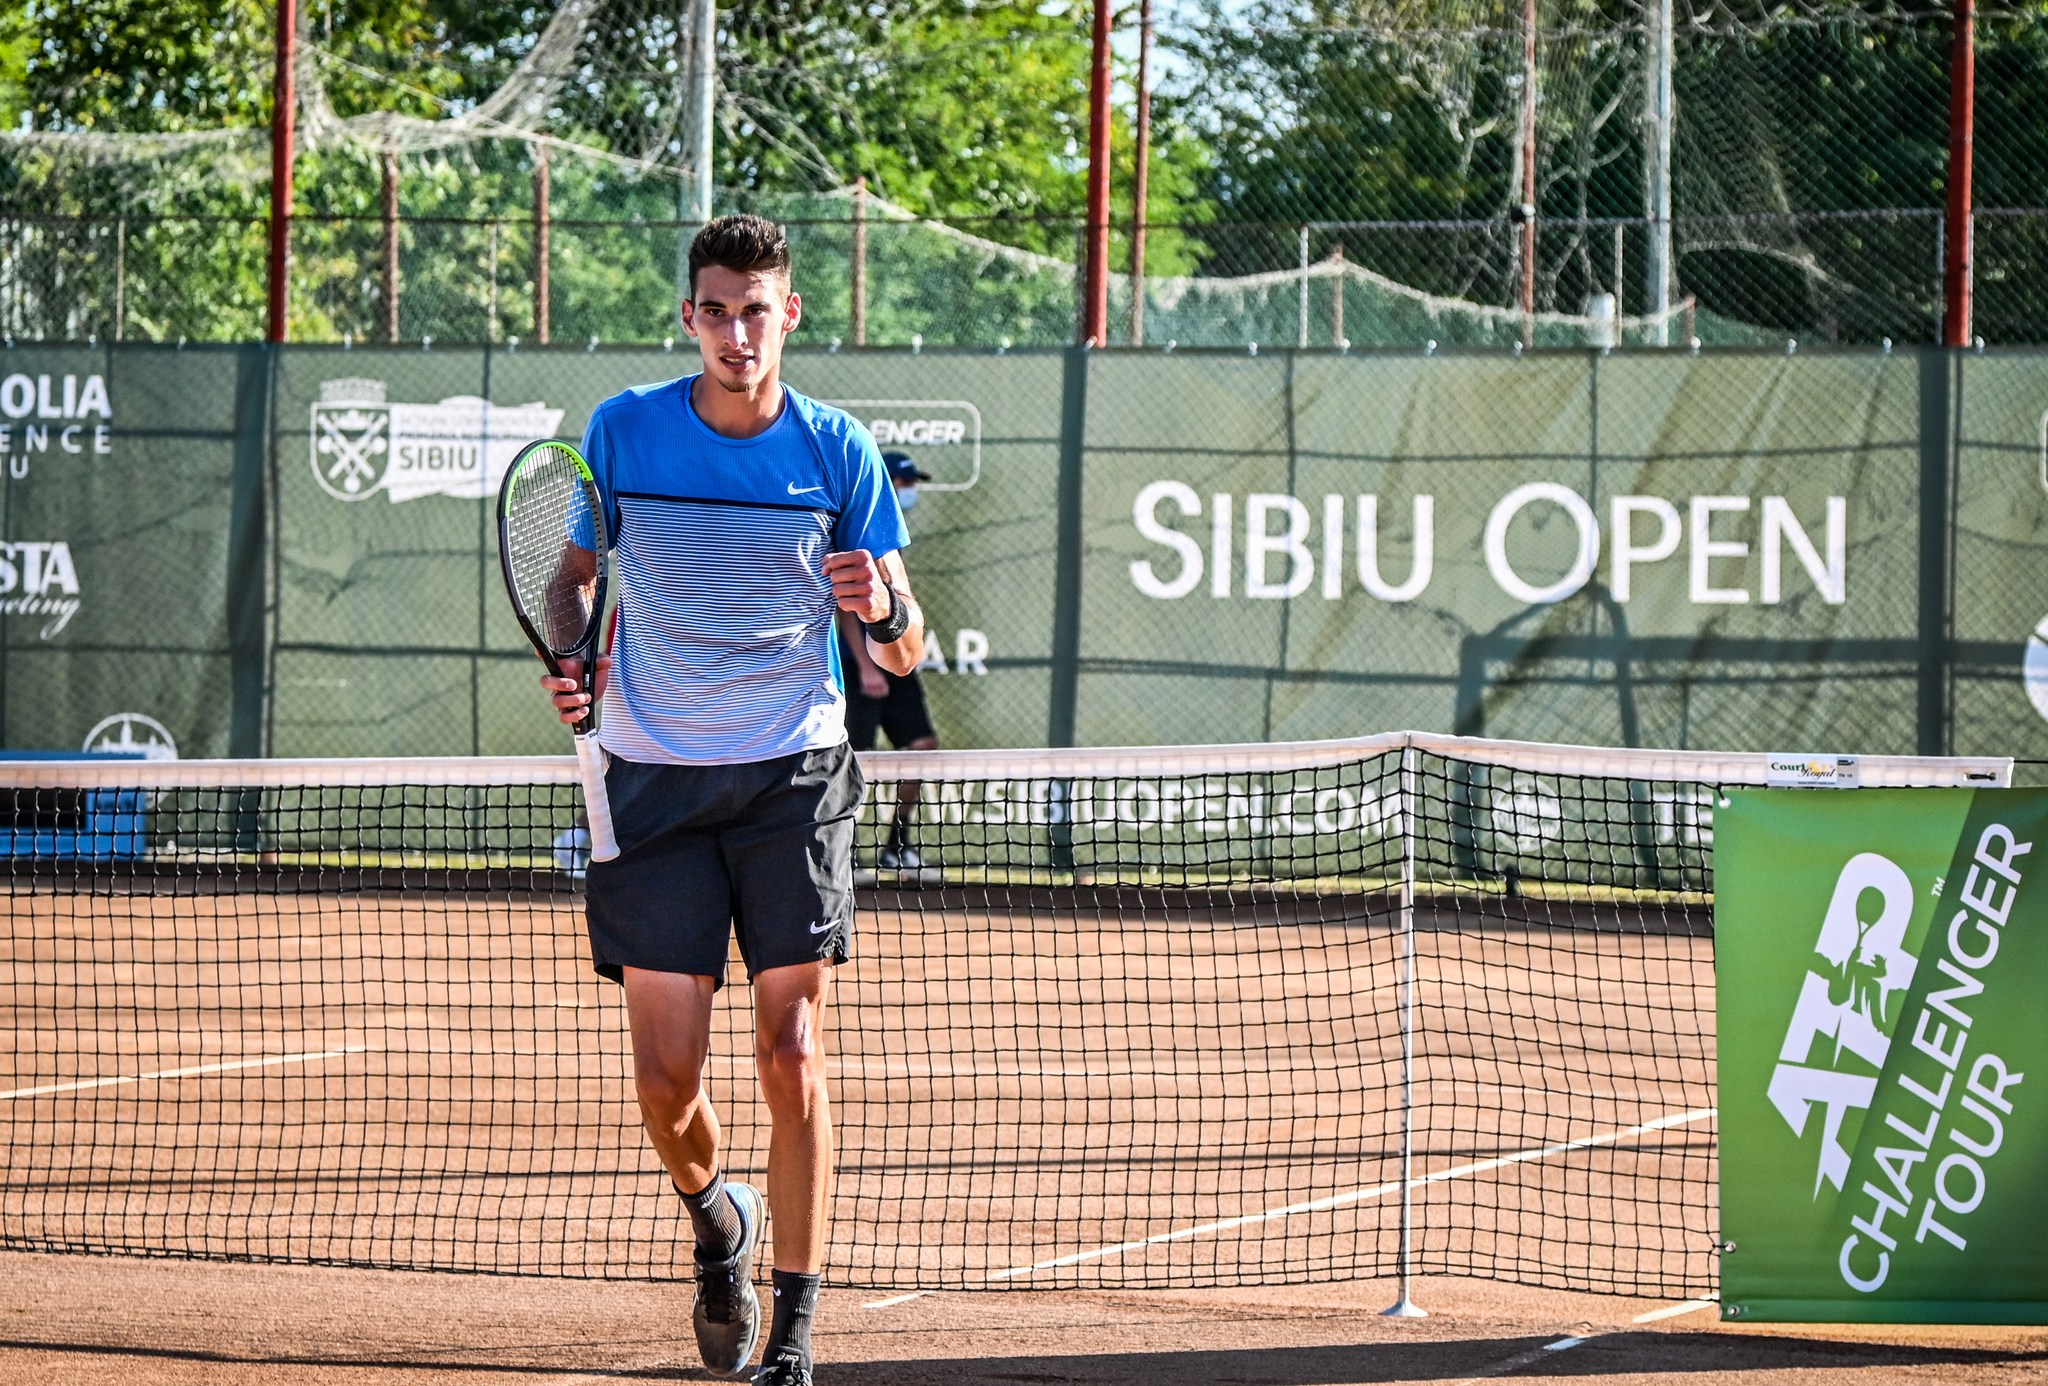 De la Cupa Davis la Sibiu Open. Cornea și Copil joacă la Sibiu